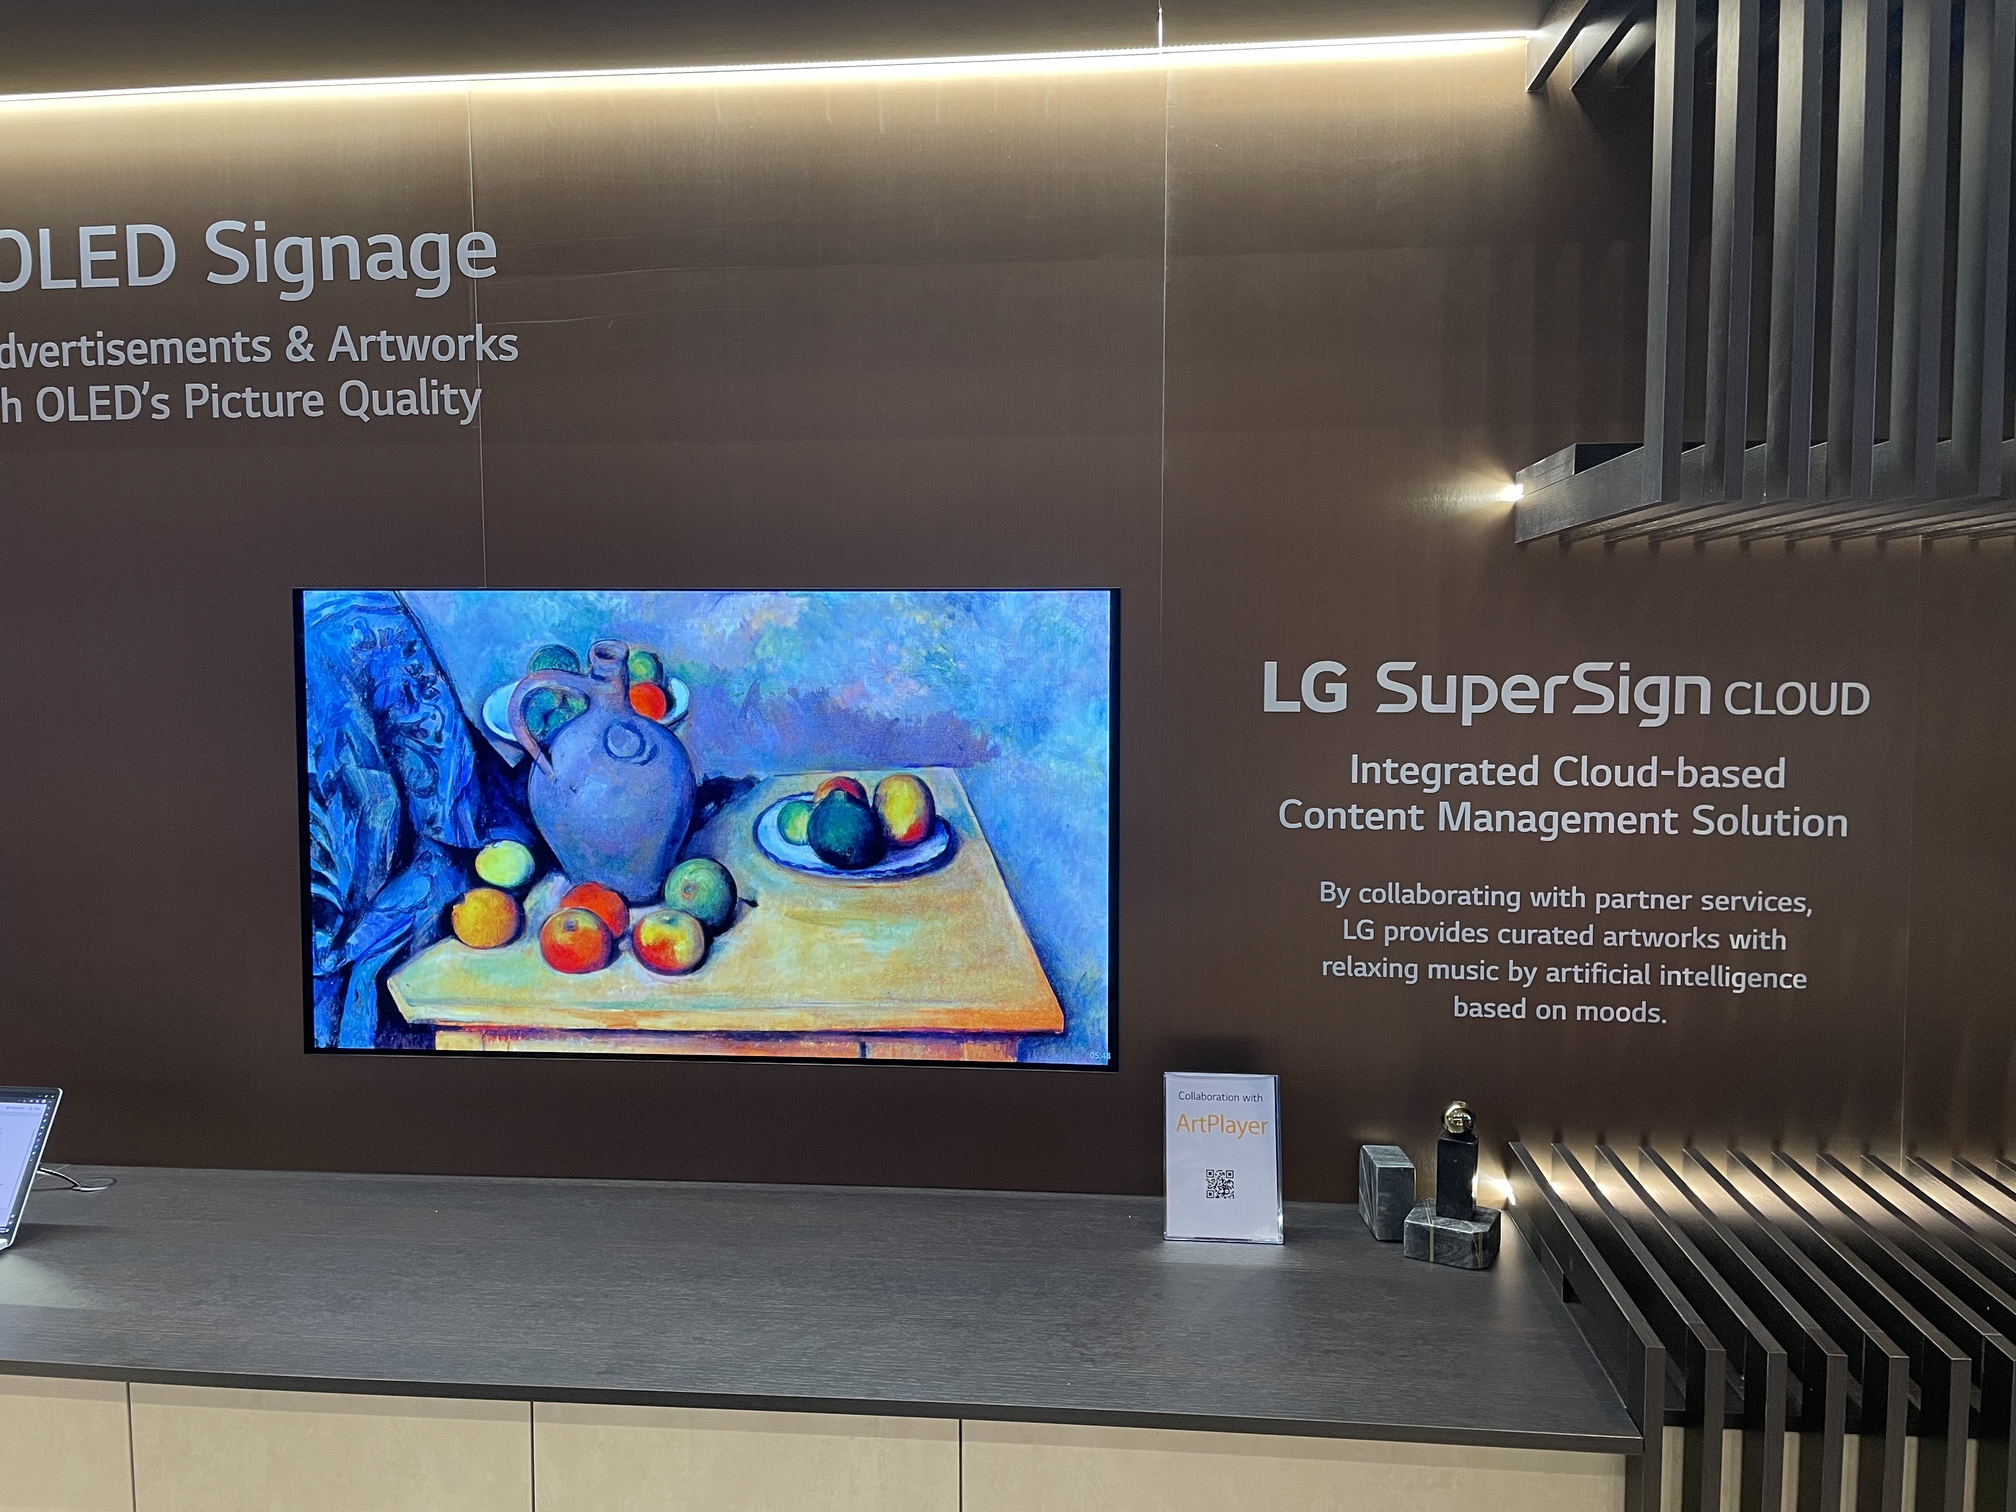 LG SuperSign Cloud ArtPlayer Integration